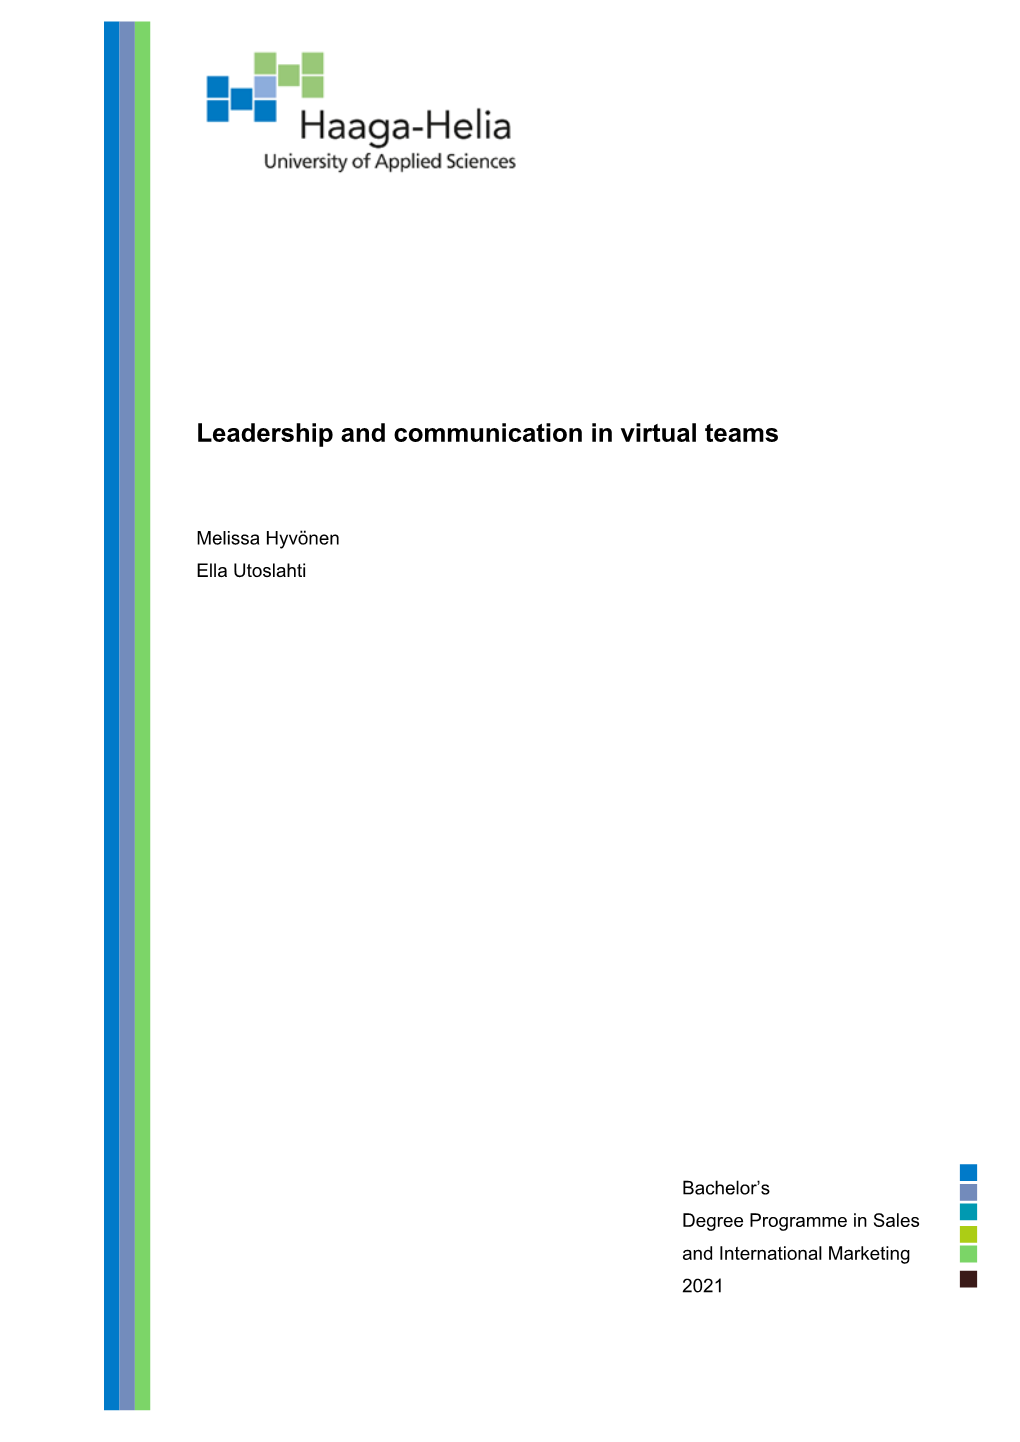 Leadership and Communication in Virtual Teams